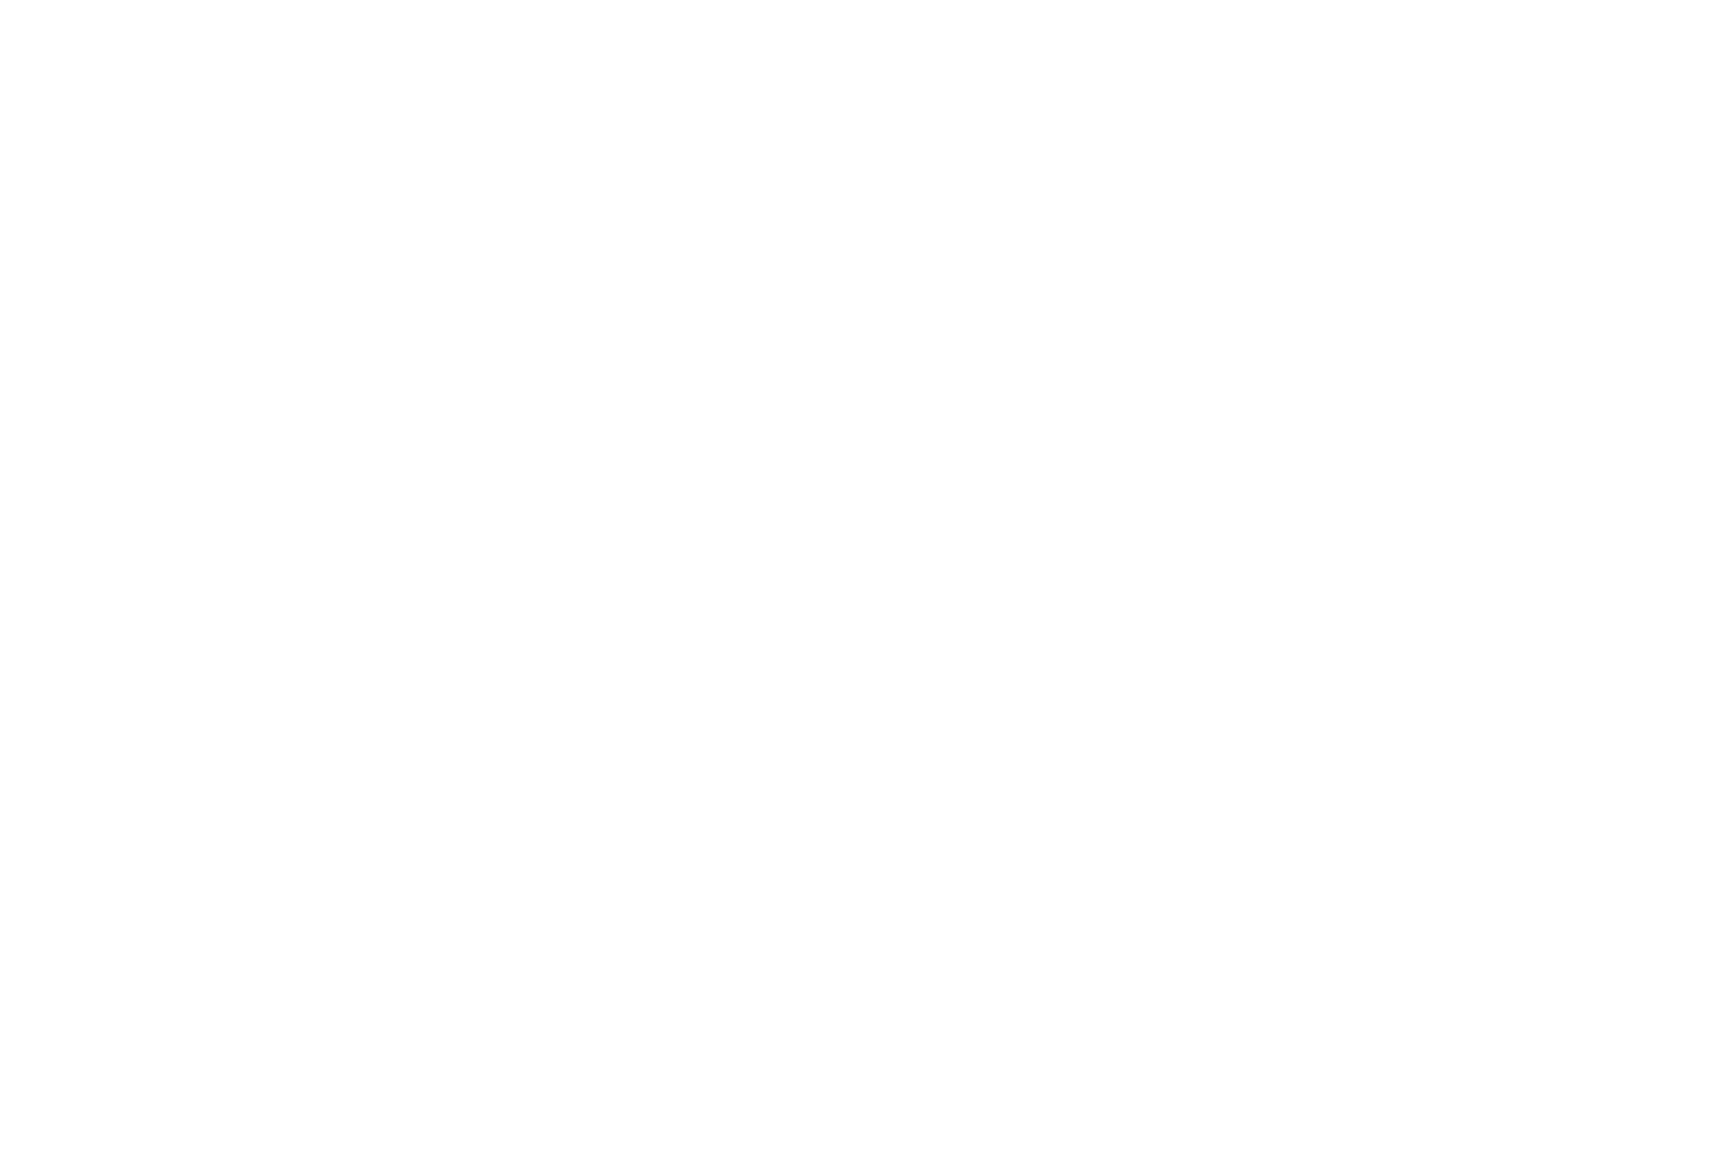 WINNER - Atlantic City Cinefest - 2018-5.png